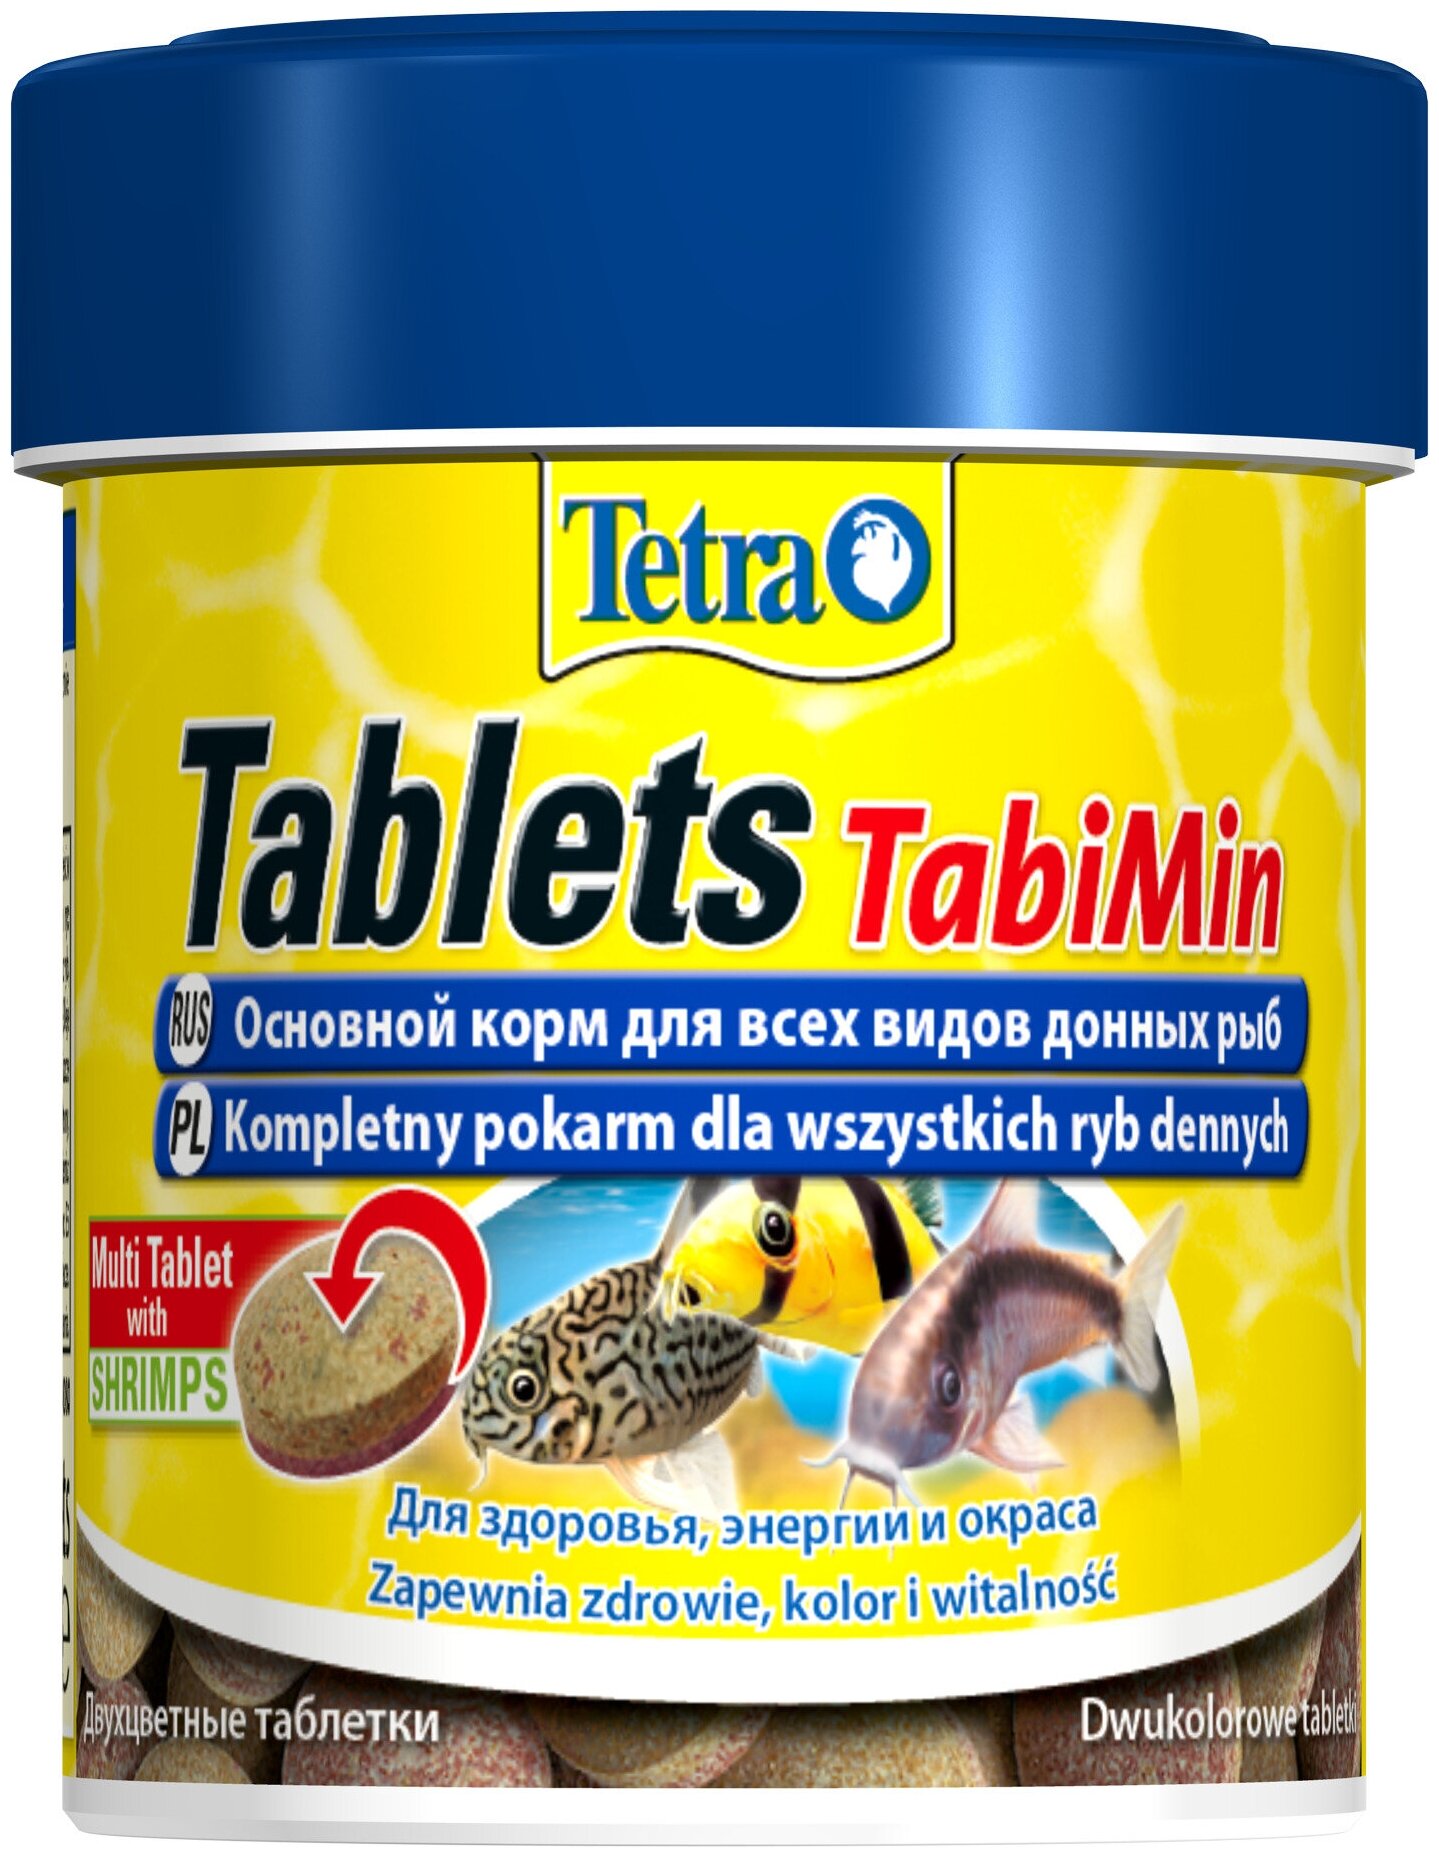 Корм для аквариумных рыб Tetra Tablets TabiMin 120 табл.